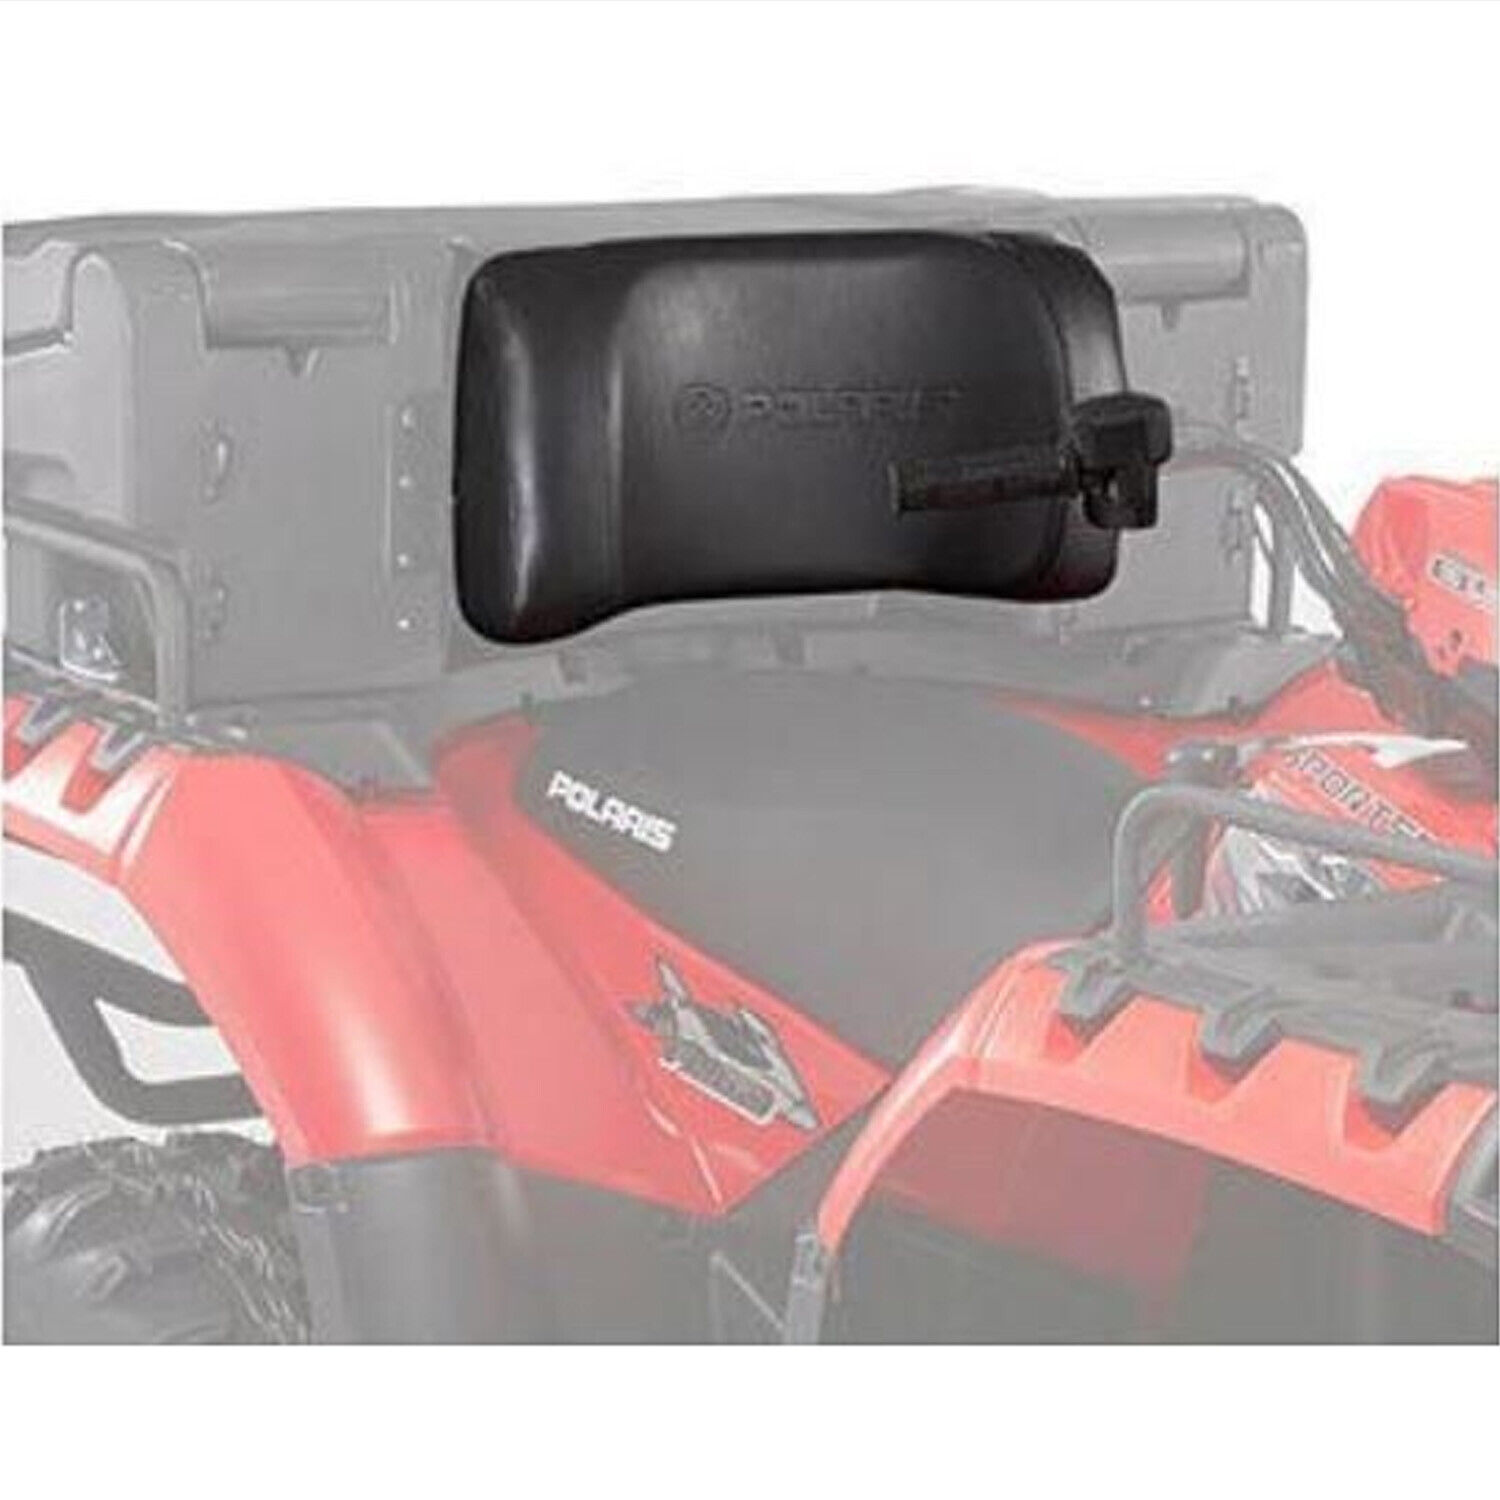 Outstanding Polaris Sale special price New OEM Sportsman ATV Cargo 2877943 287 Box Backrest Kit